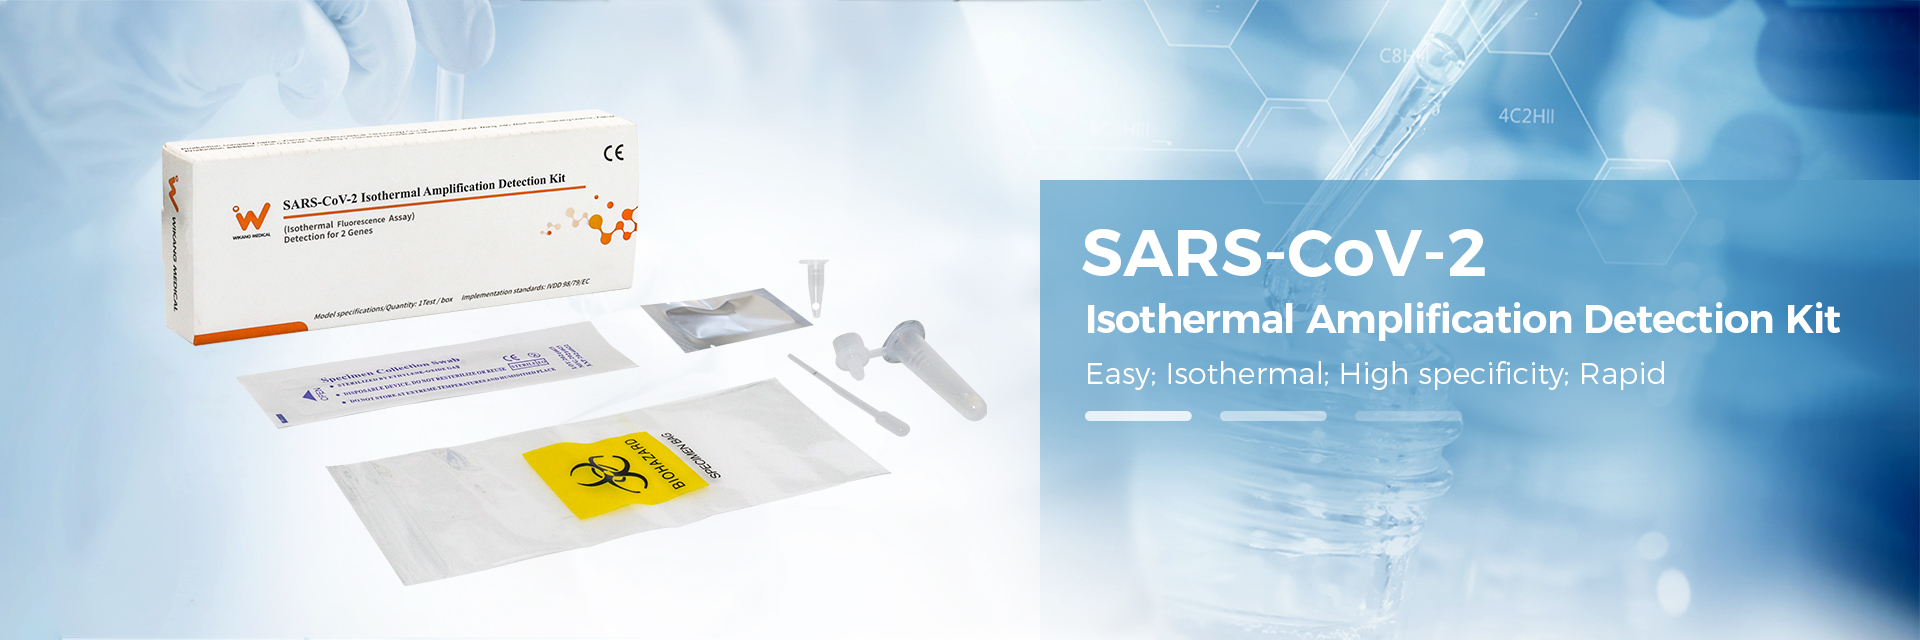 ʻO SARS-CoV-2 Isothermal Amplification Detection Kit